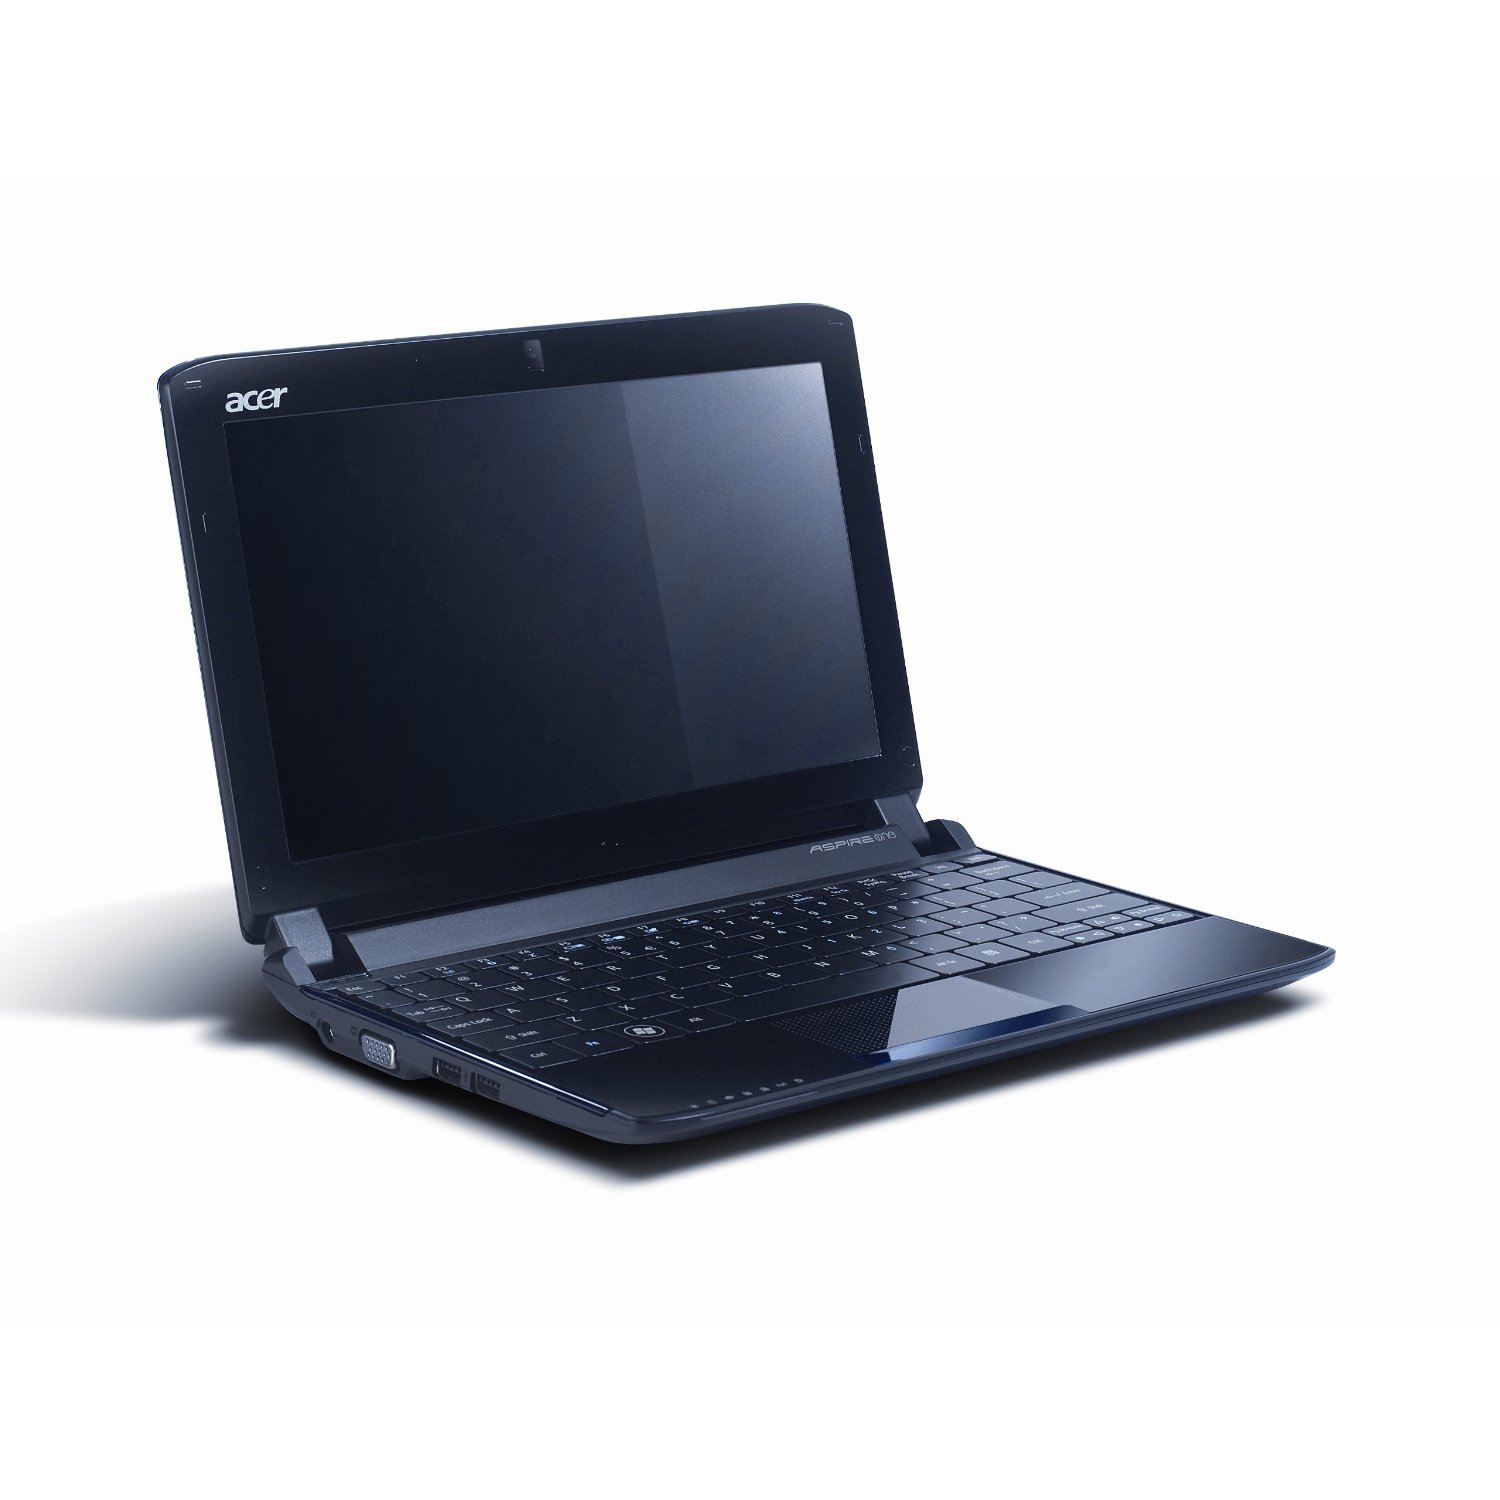 Netbook Acer Aspire One AO532h 2588 Spec Harga dan 